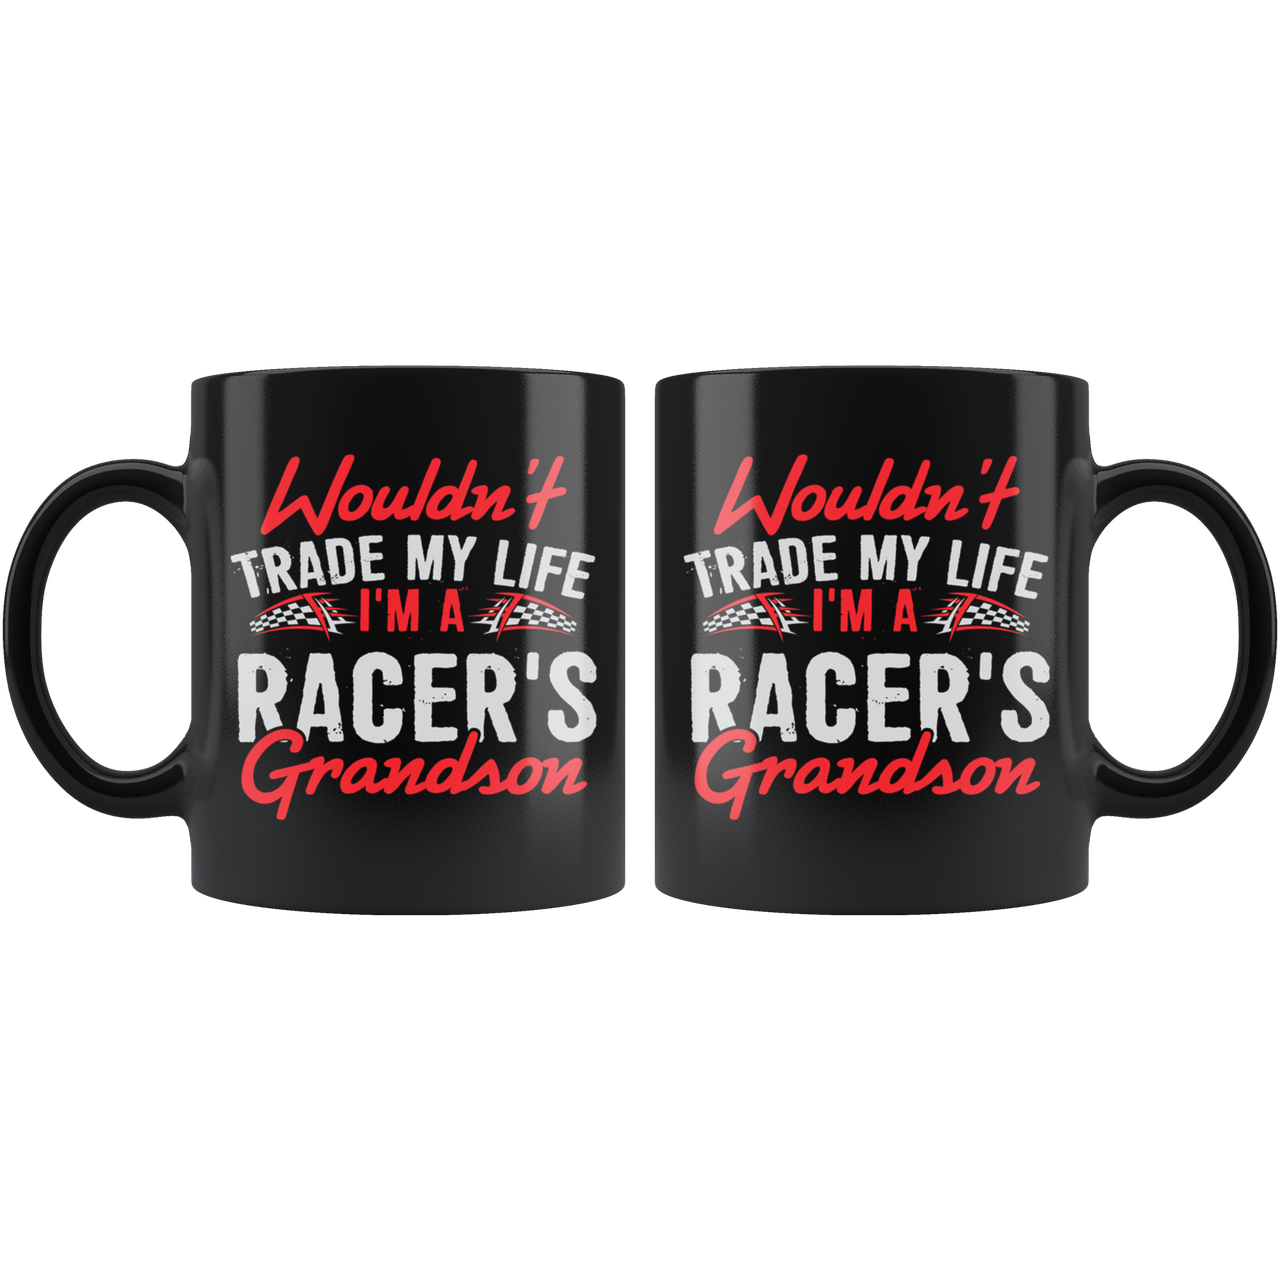 Wouldn't Trade My Life I'm A Racer's Grandson Mug!